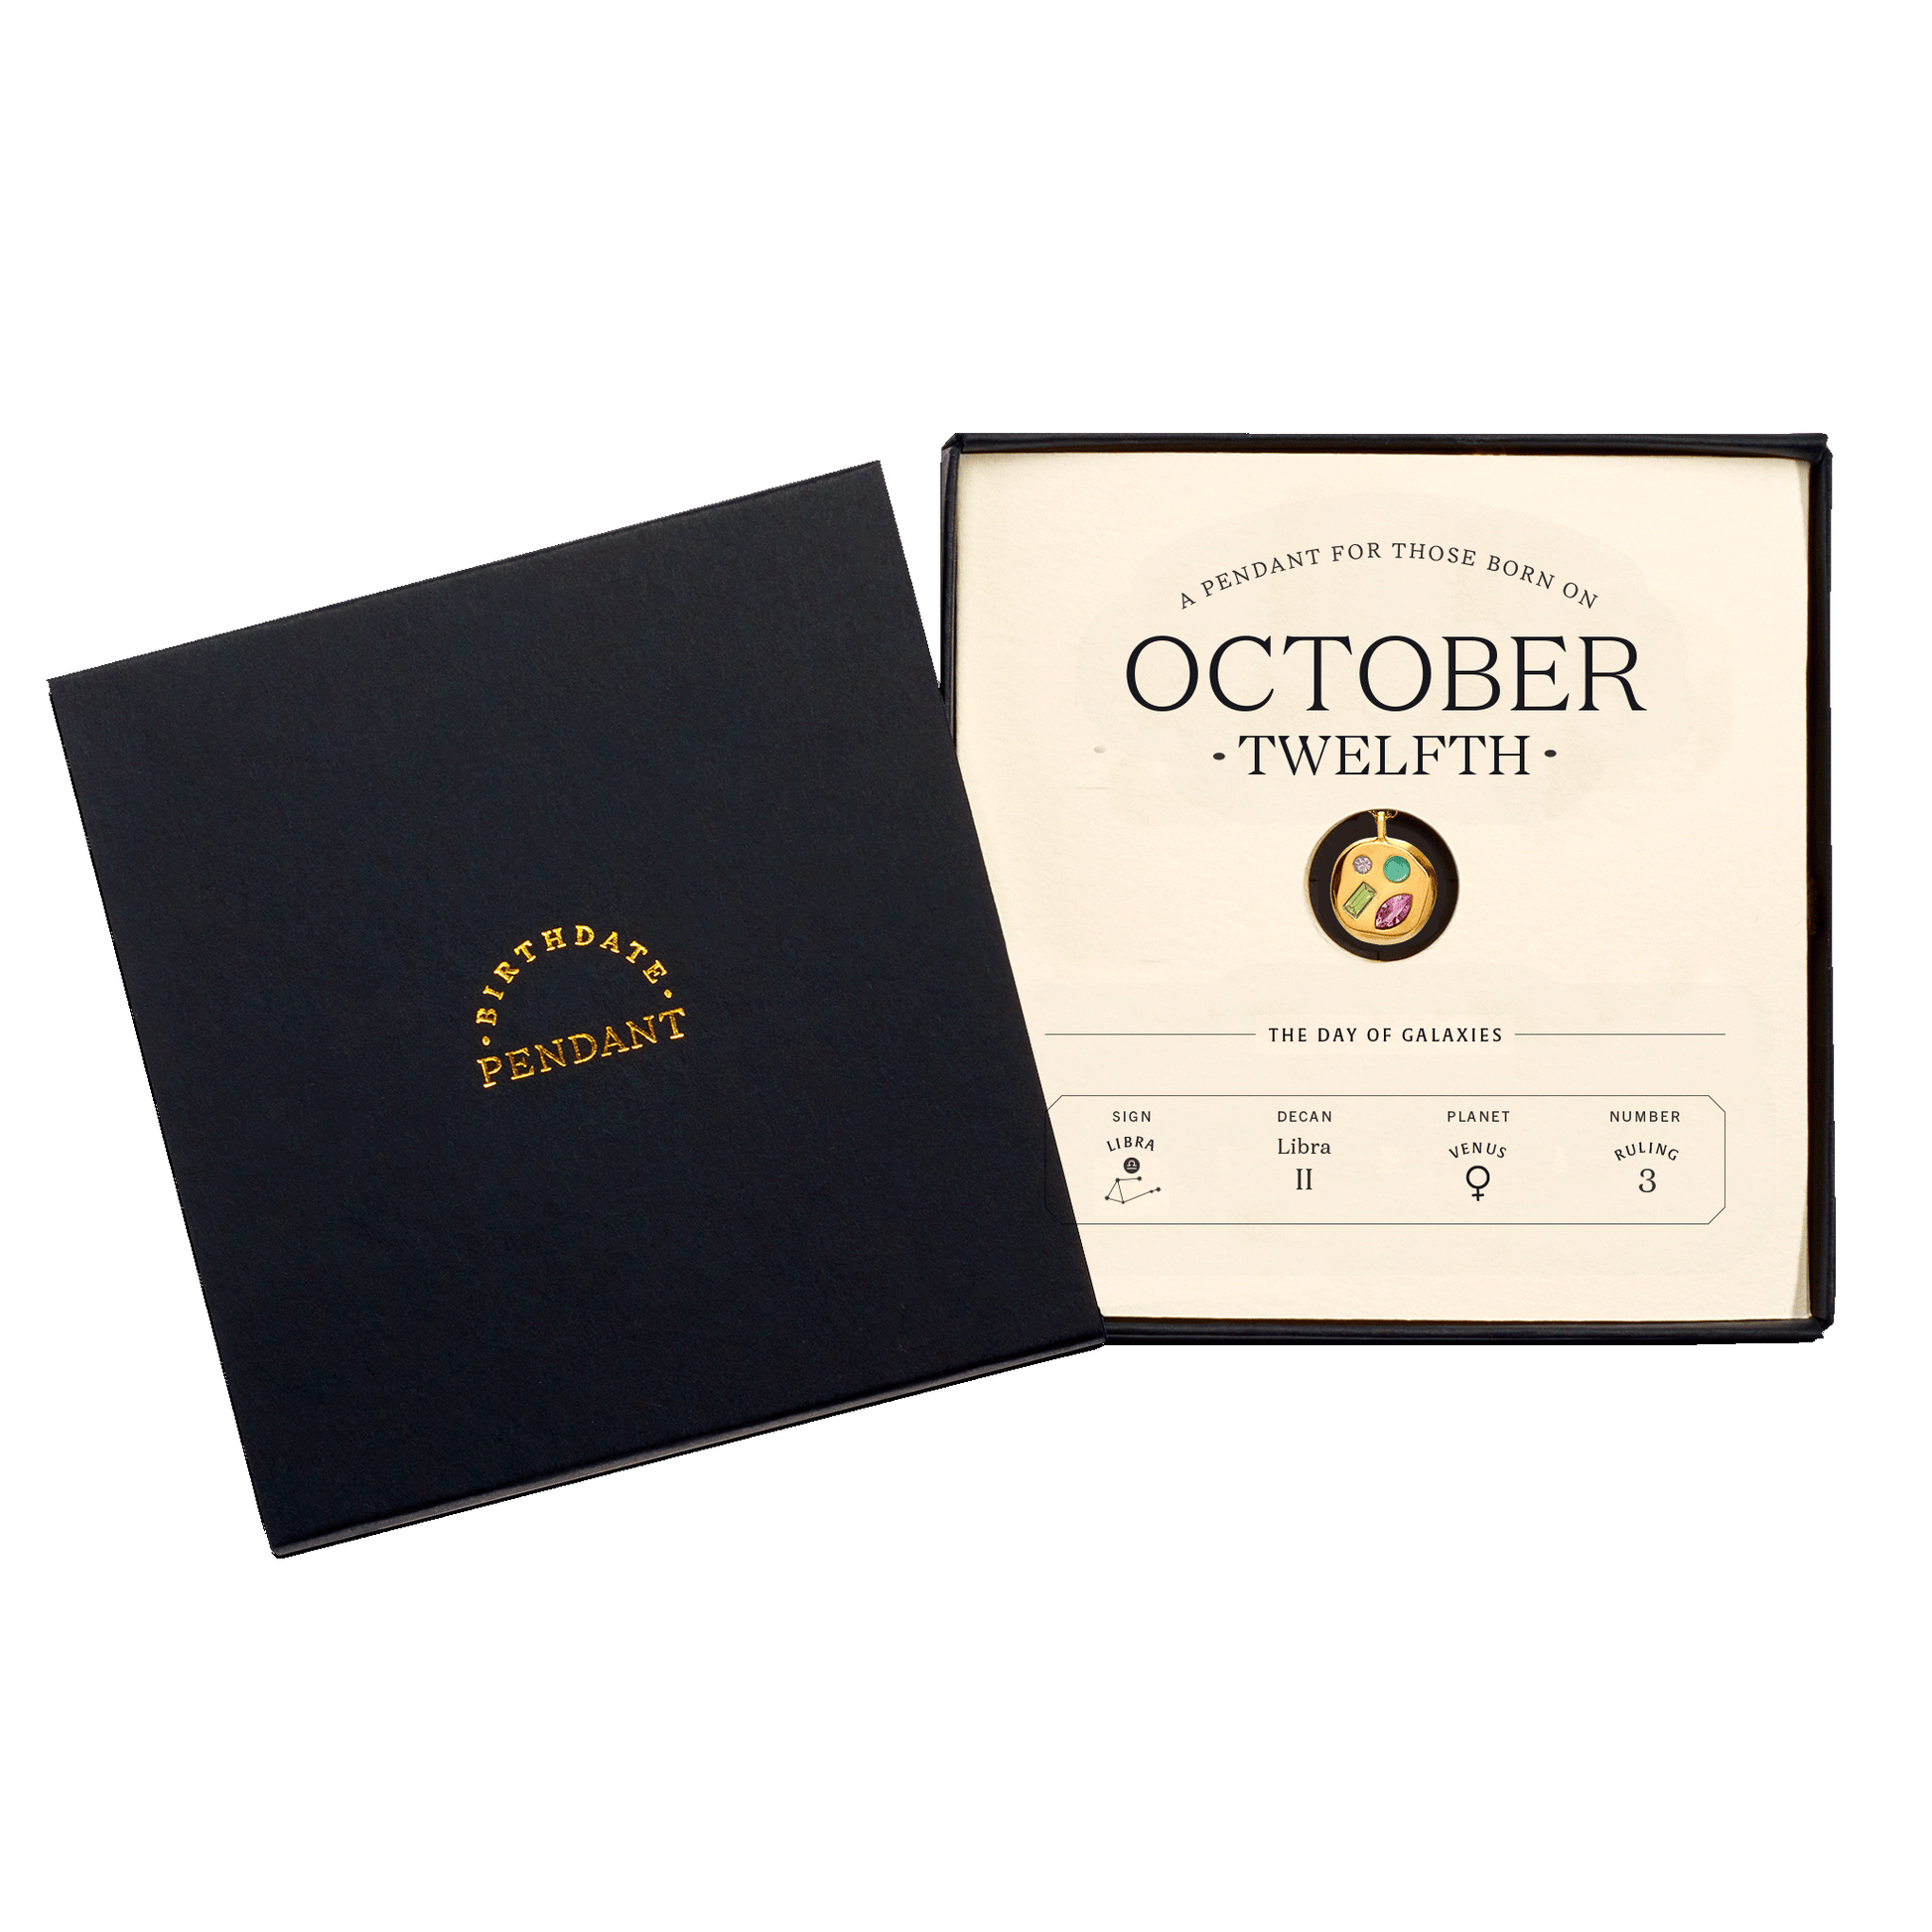 The October Twelfth Pendant inside its box